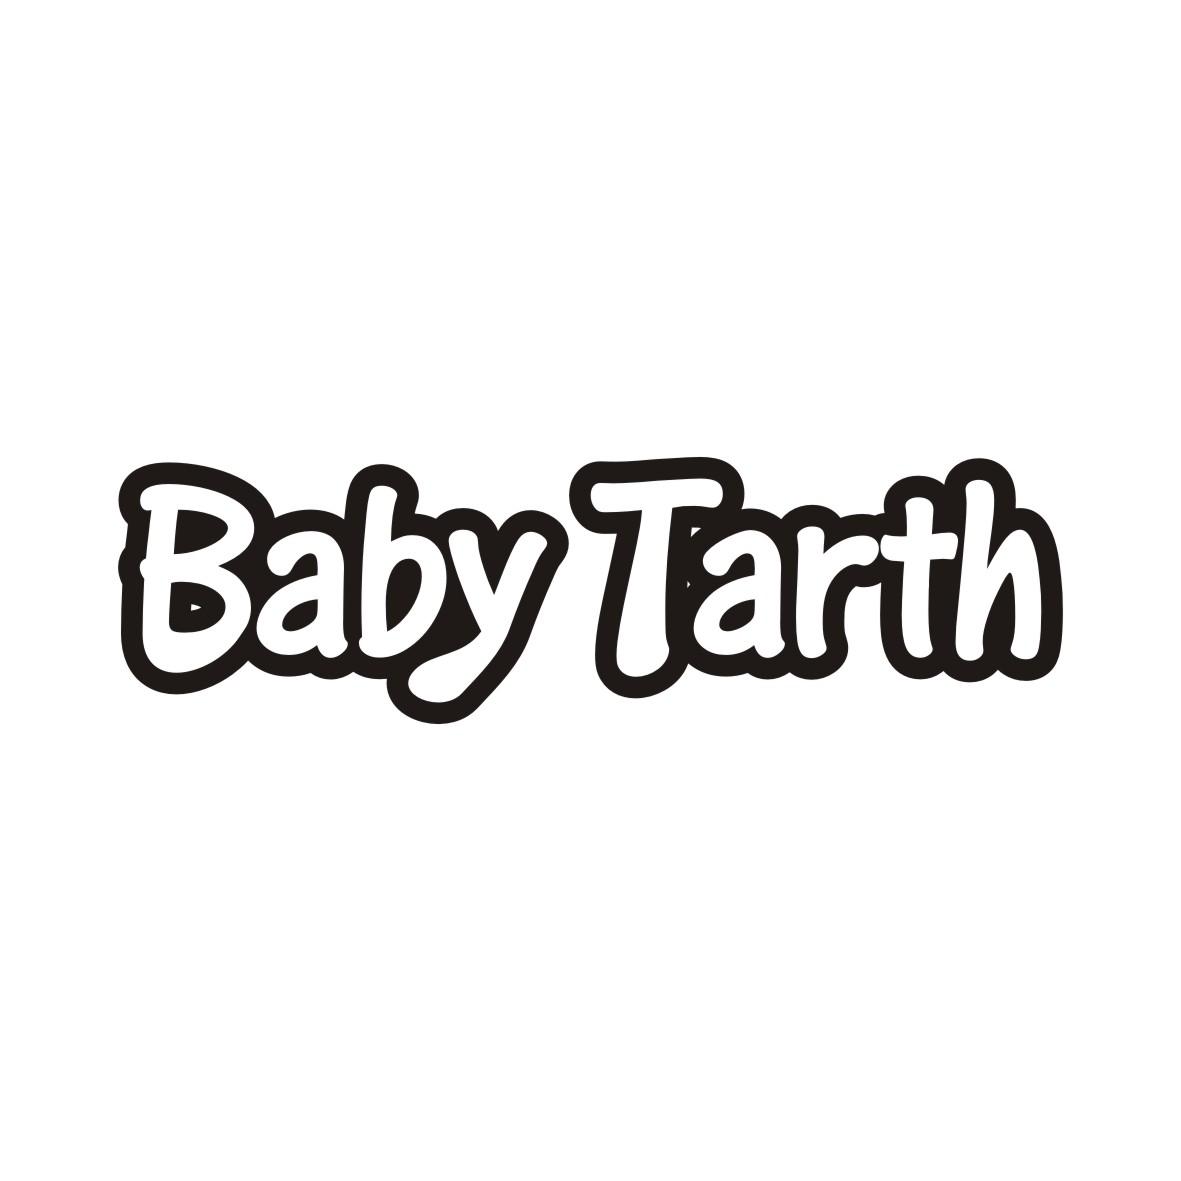 BABYTARTH